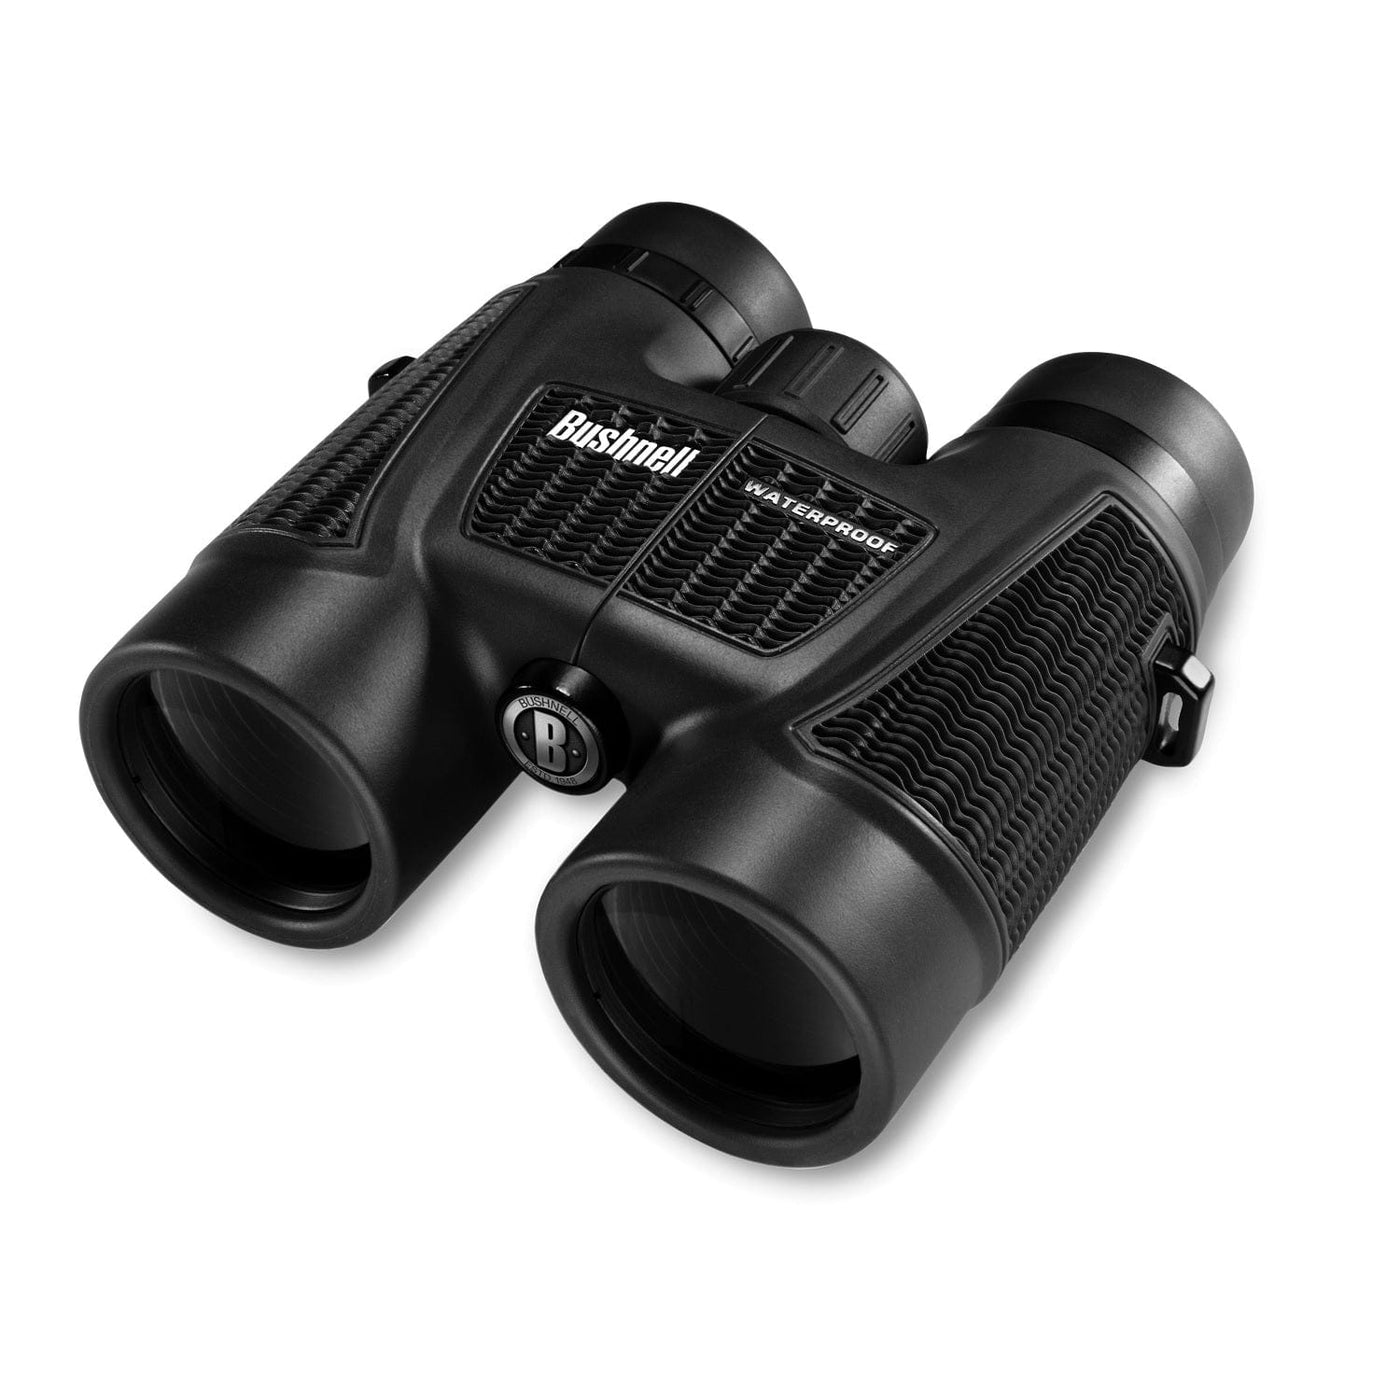 Bushnell Bushnell Binoculars 10x42mm Dark Blue Roof BAK-4 Optics And Sights